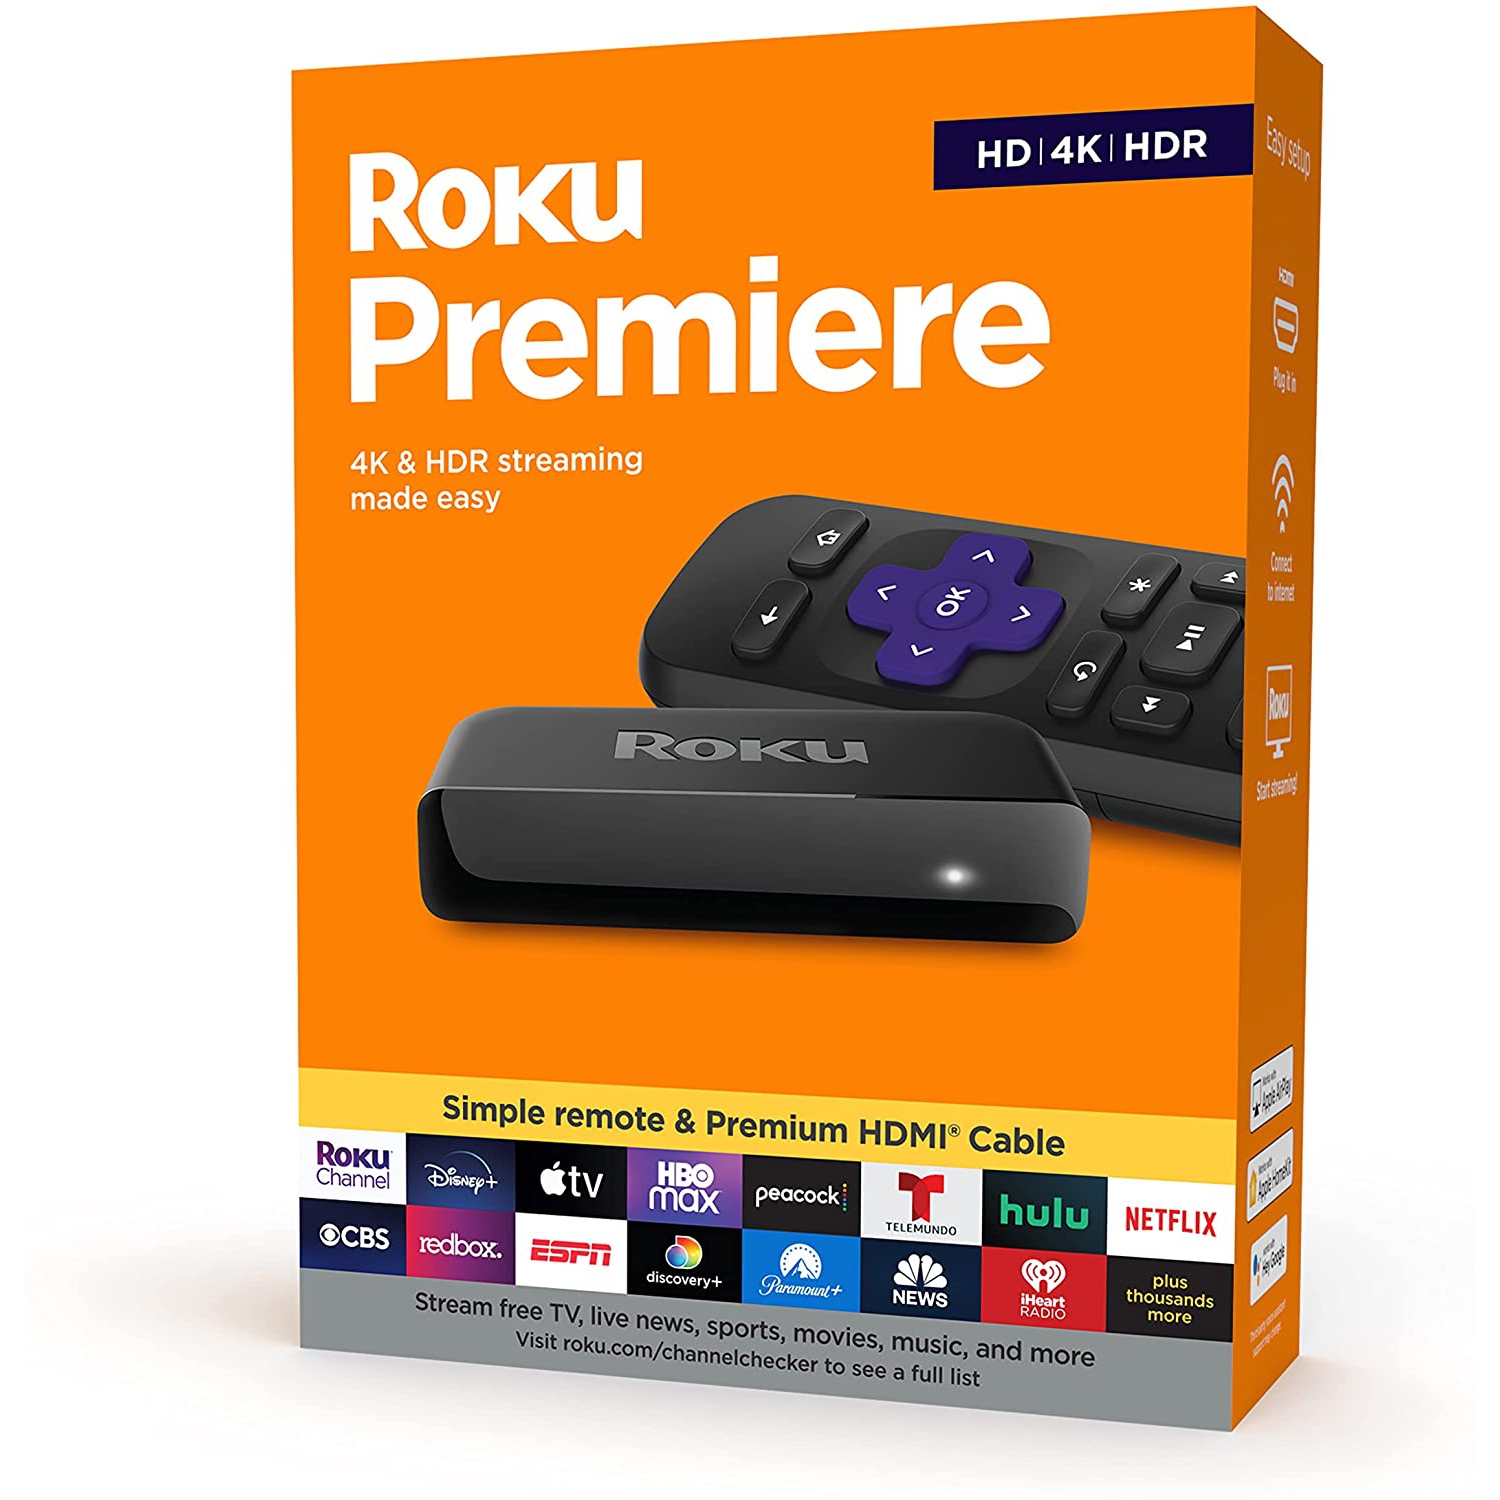 Roku Premiere | HD/4K/HDR Streaming Media Player - Black - Brand New